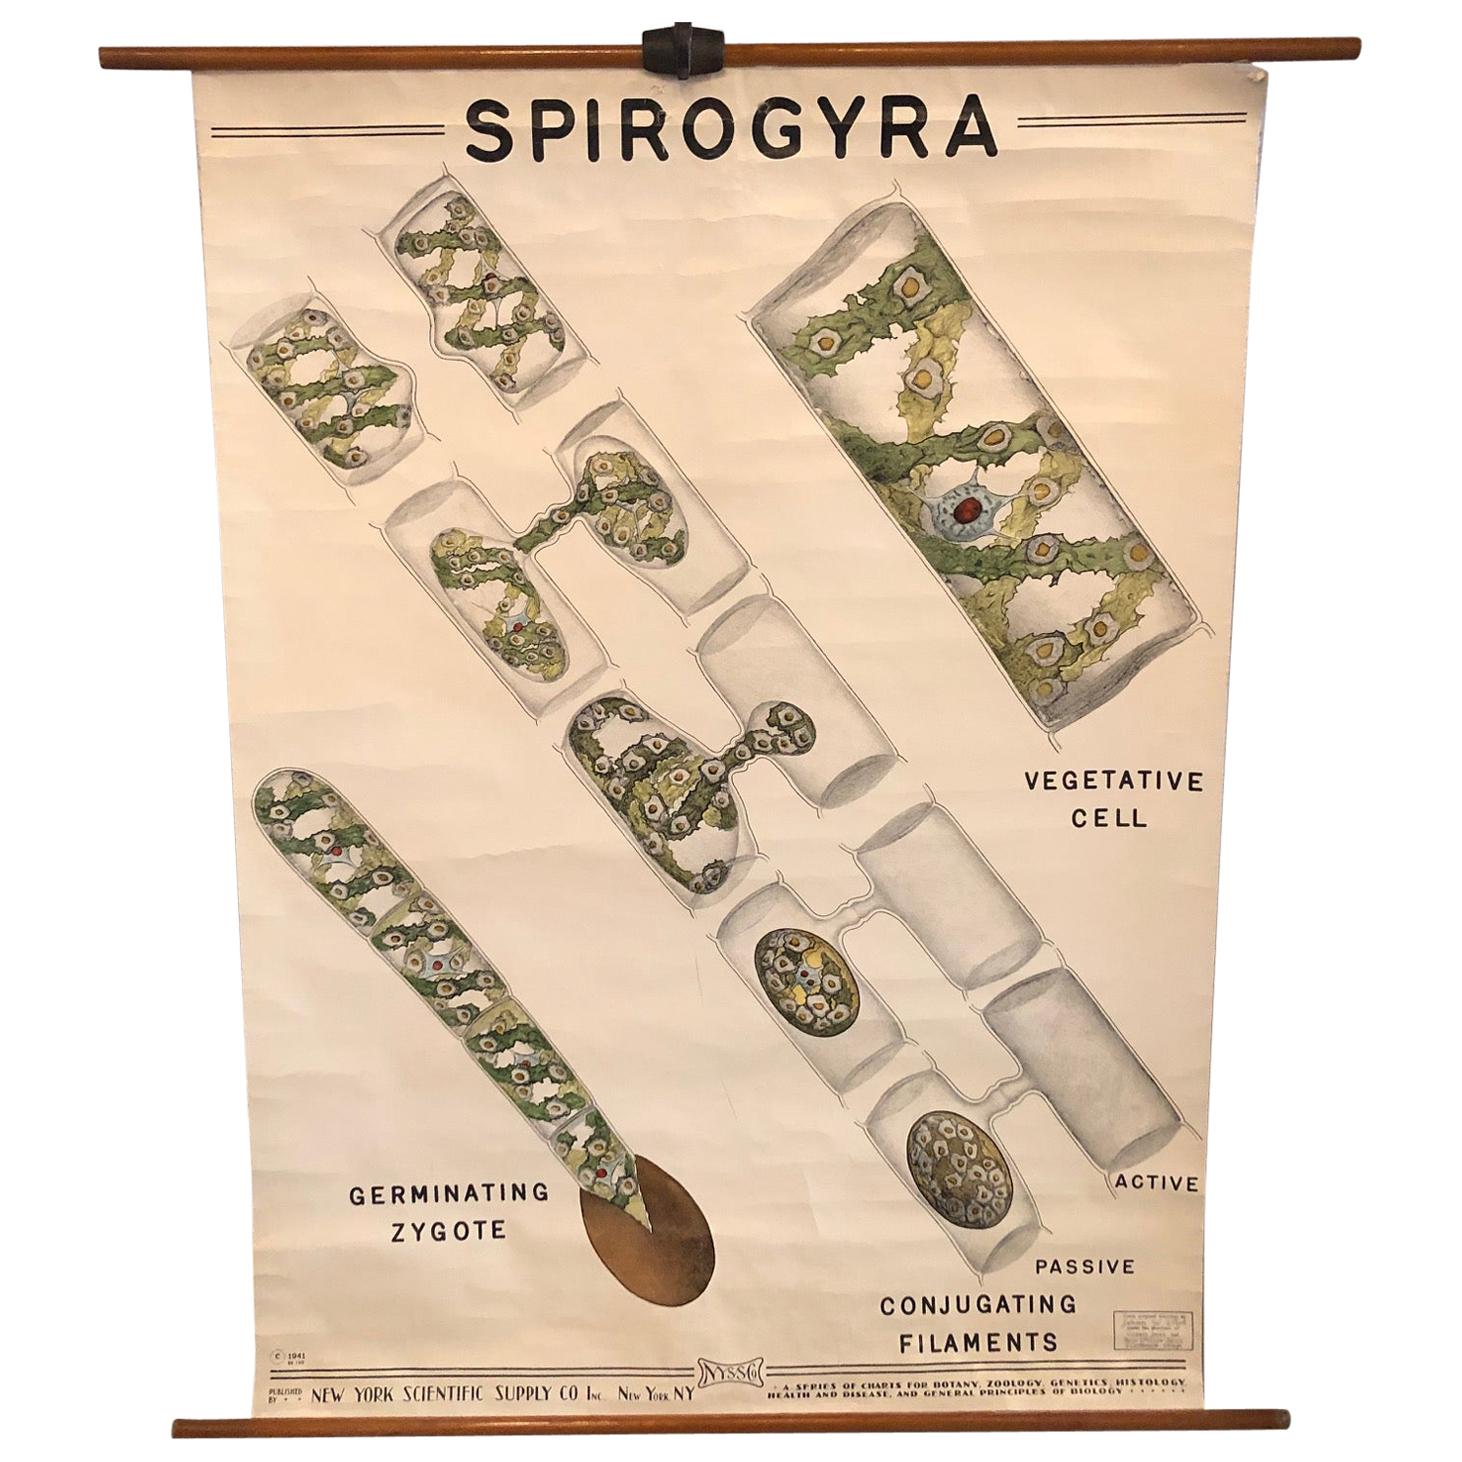 Tableau de biologie botanique éducatif Spirogyra de New York Scientific Supply Co.